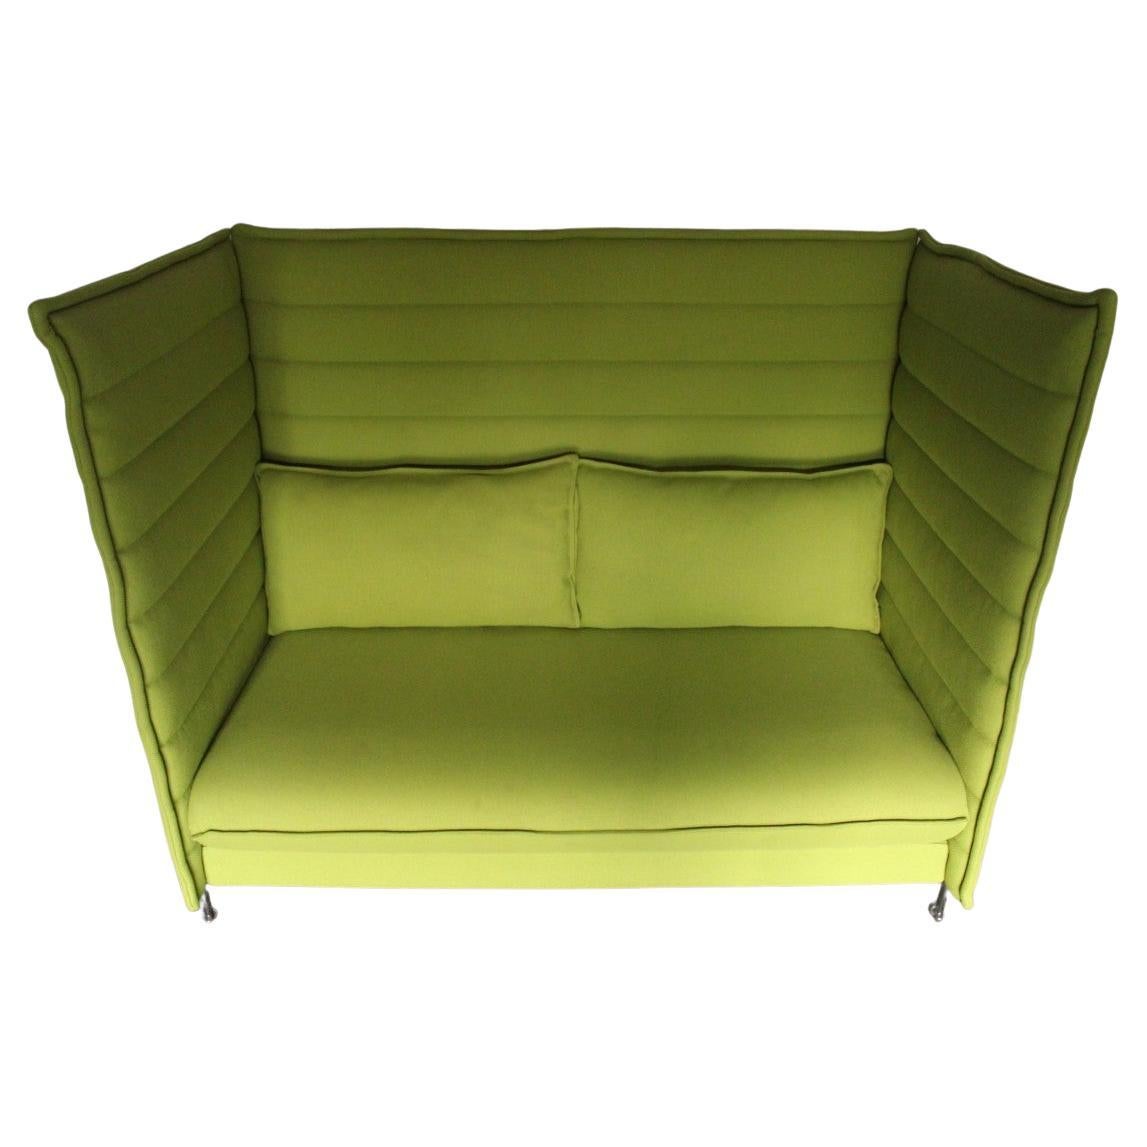 Mintfarbenes Vitra Alcove 2-Sitz-Sofa mit hoher Rückenlehne in Limonengrün Credo-Stoff 